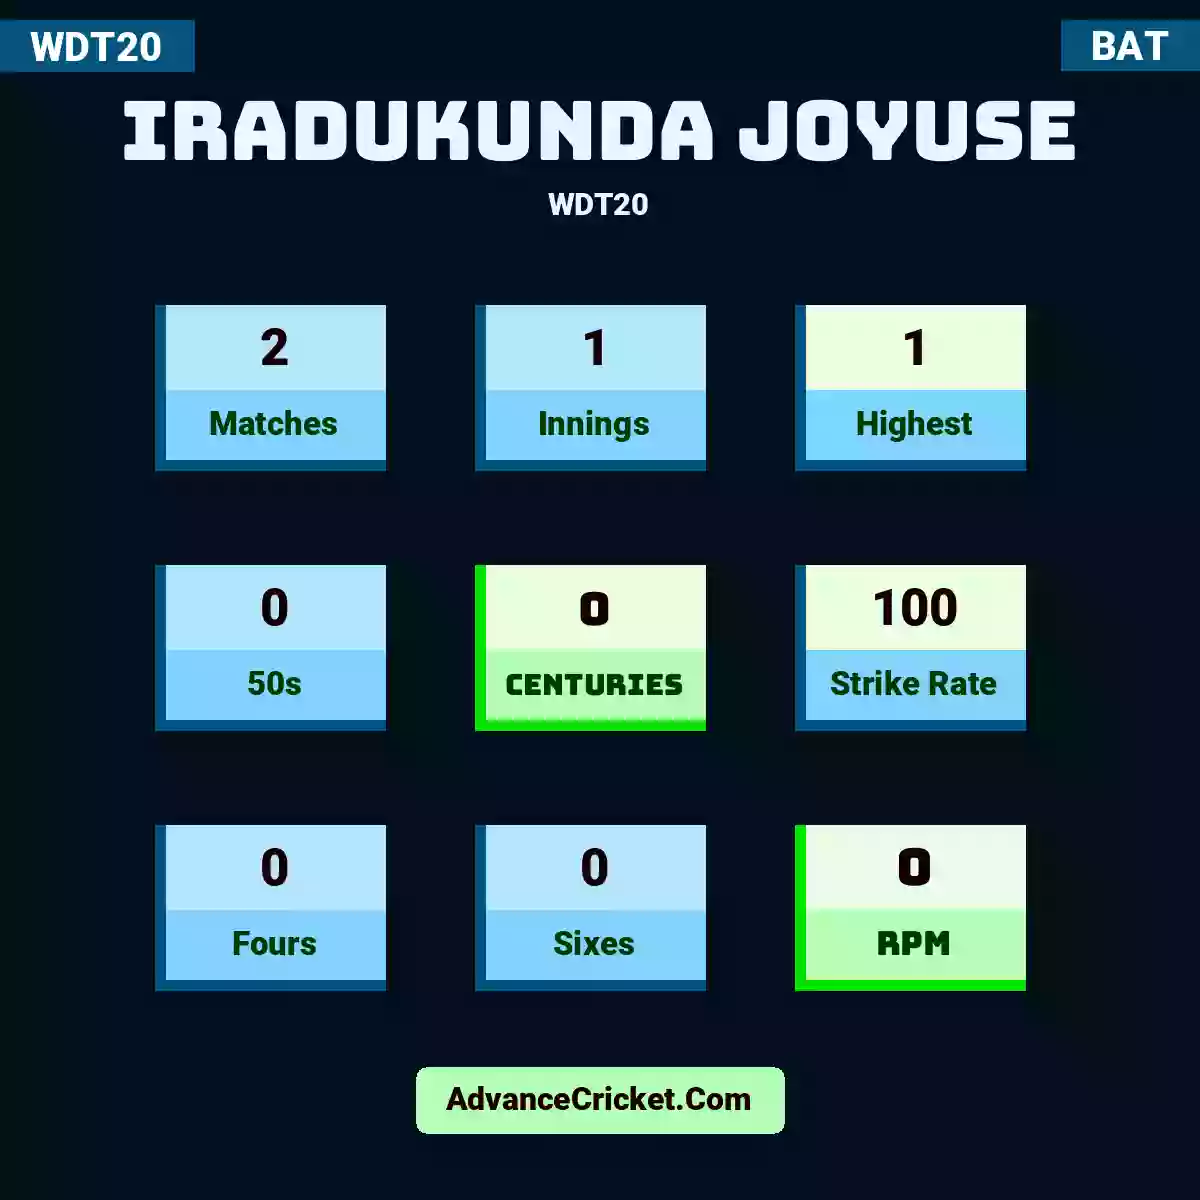 Iradukunda Joyuse WDT20 , Iradukunda Joyuse played 2 matches, scored 1 runs as highest, 0 half-centuries, and 0 centuries, with a strike rate of 100. I.Joyuse hit 0 fours and 0 sixes, with an RPM of 0.